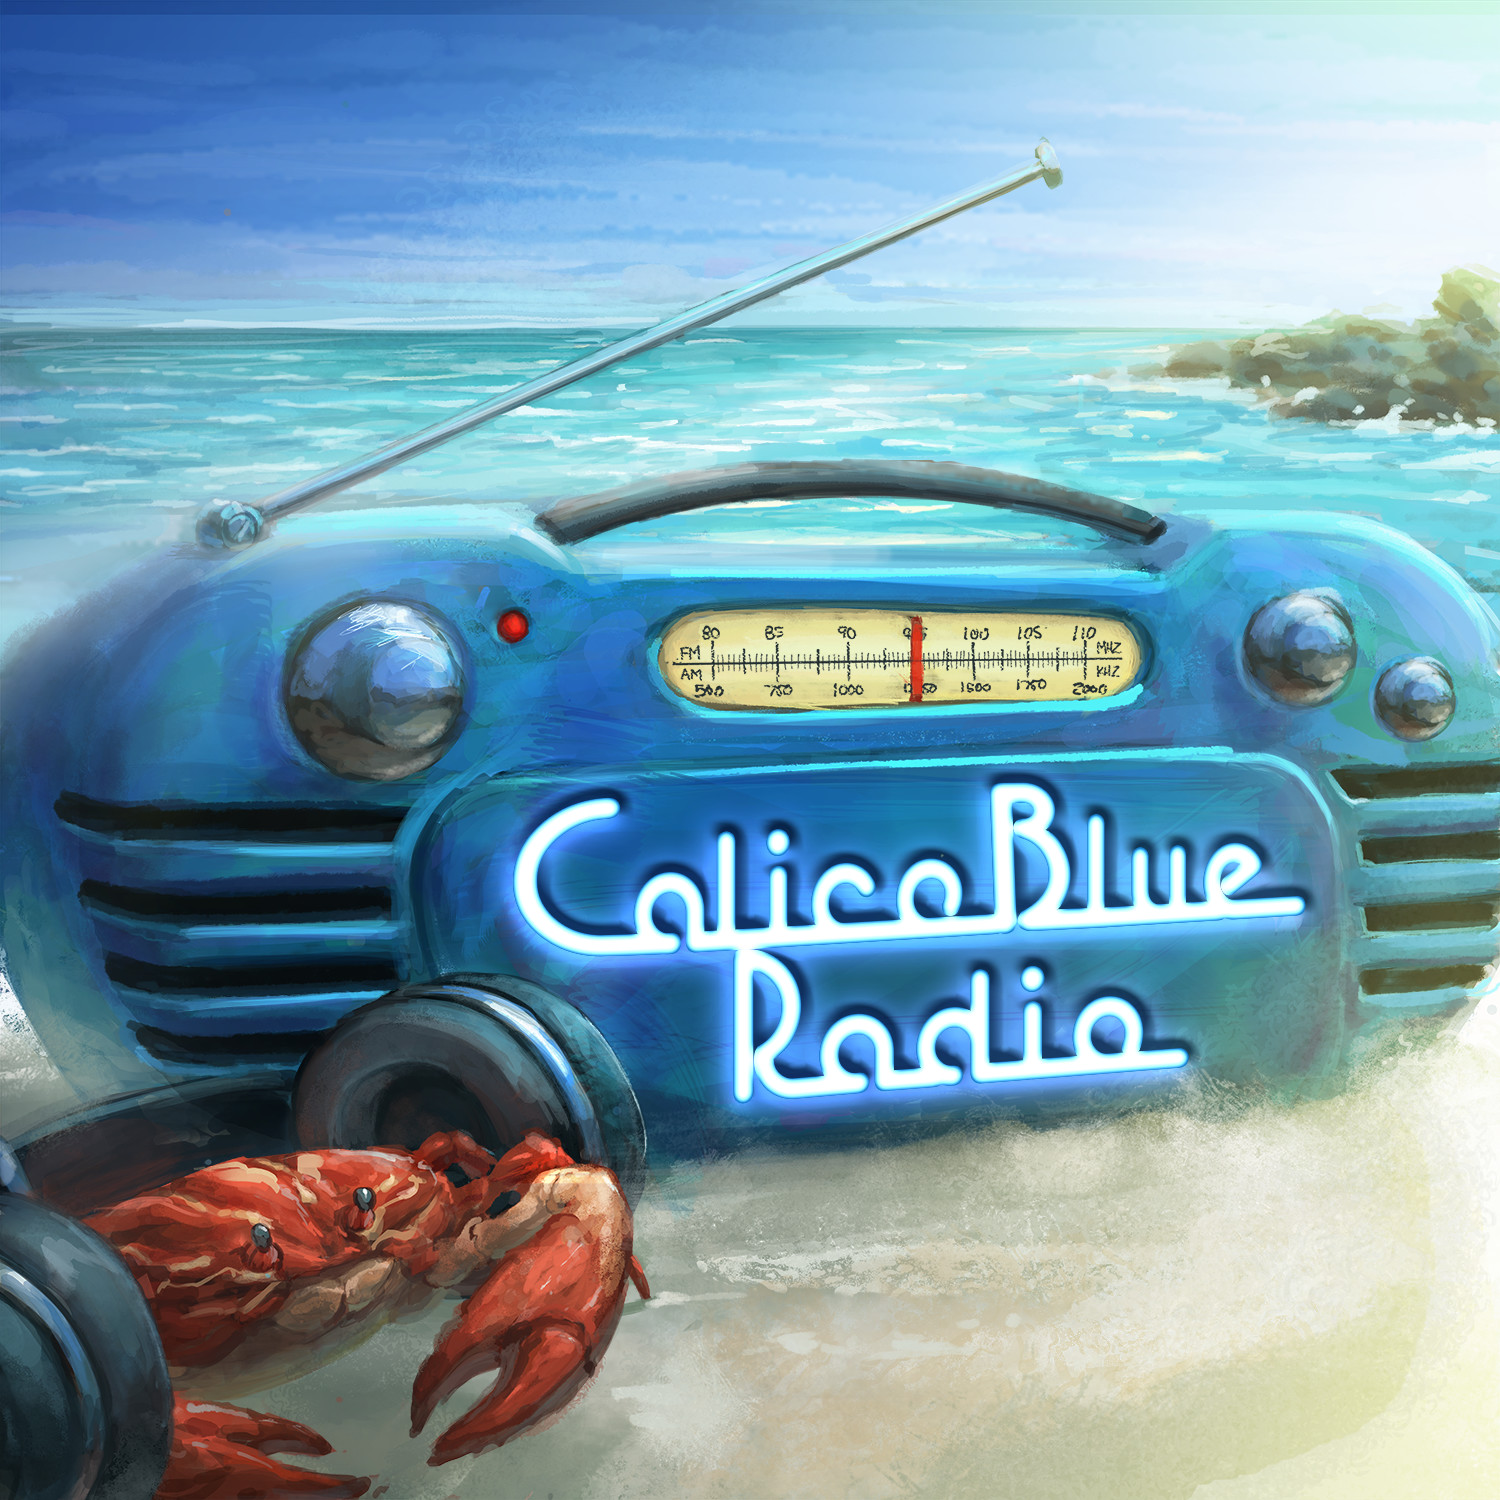 Calico Blue Radio